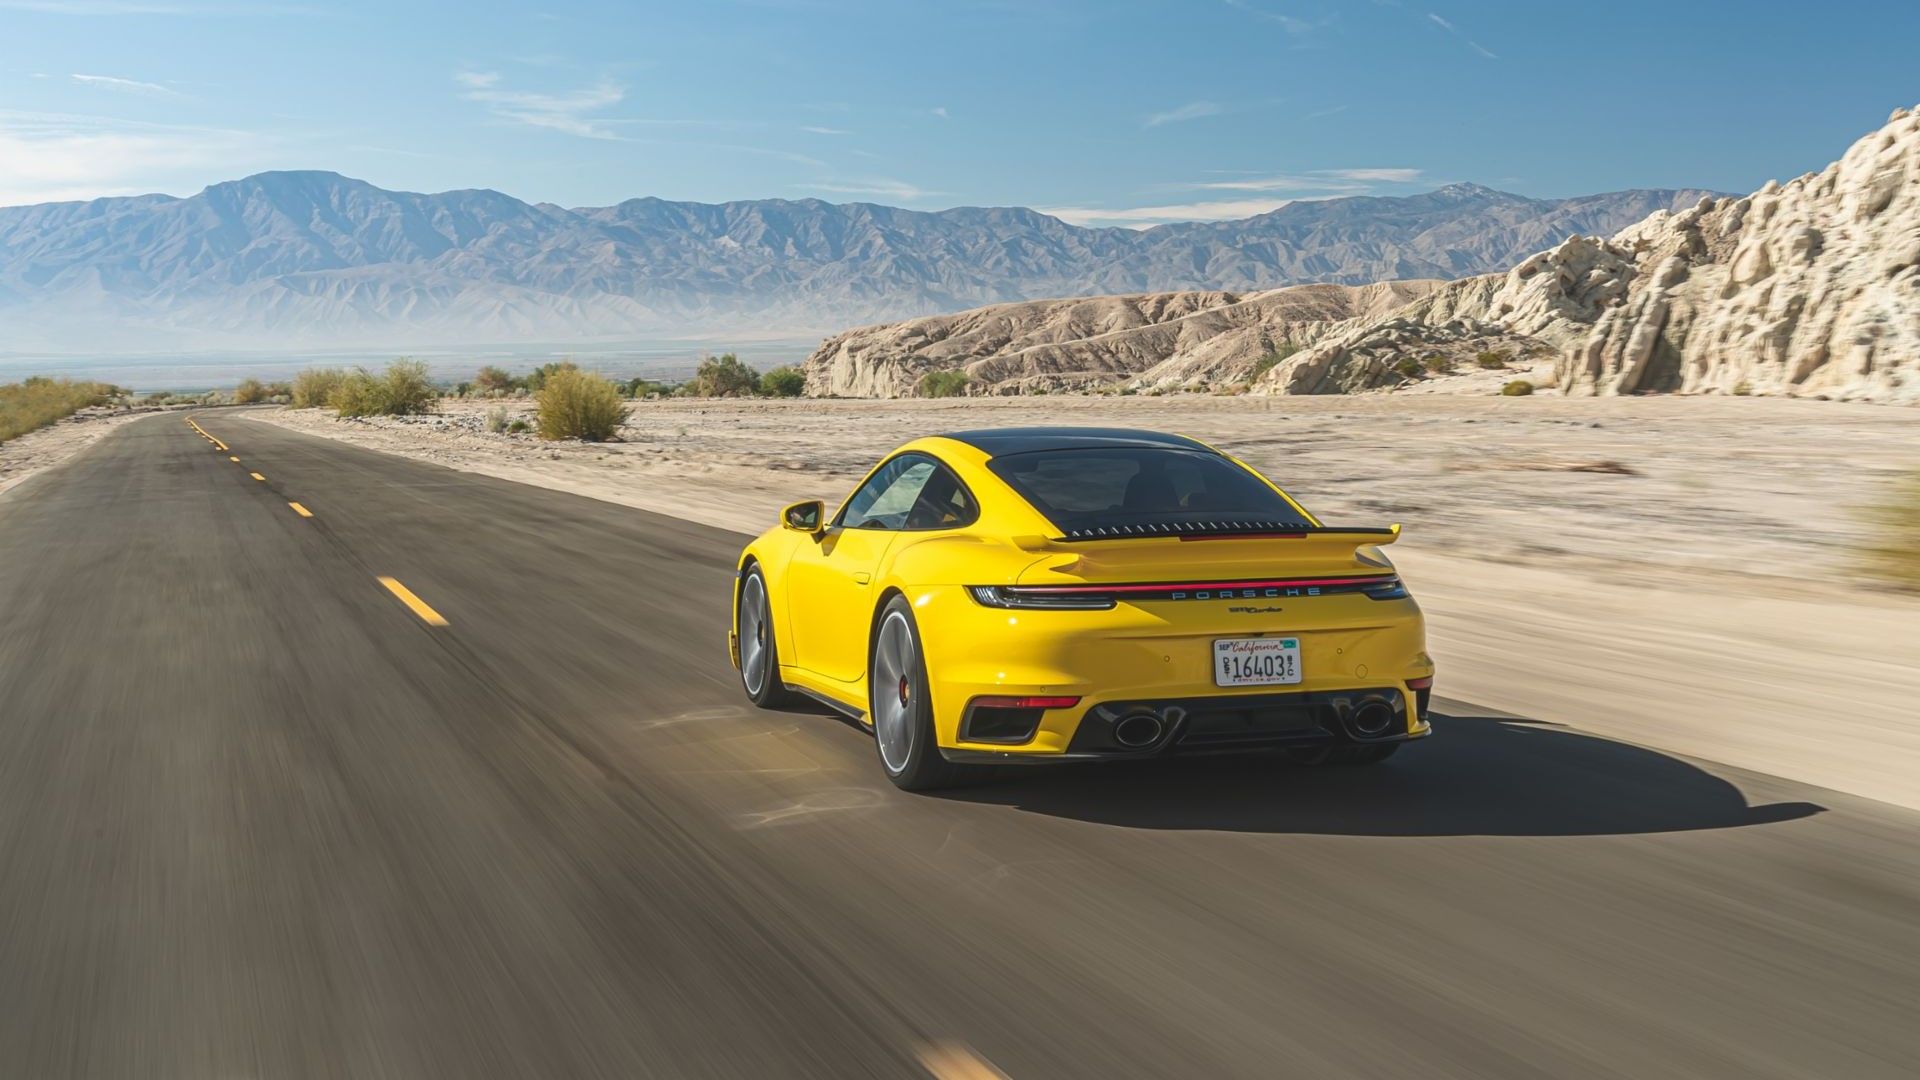 Porsche 911 Turbo Yellow